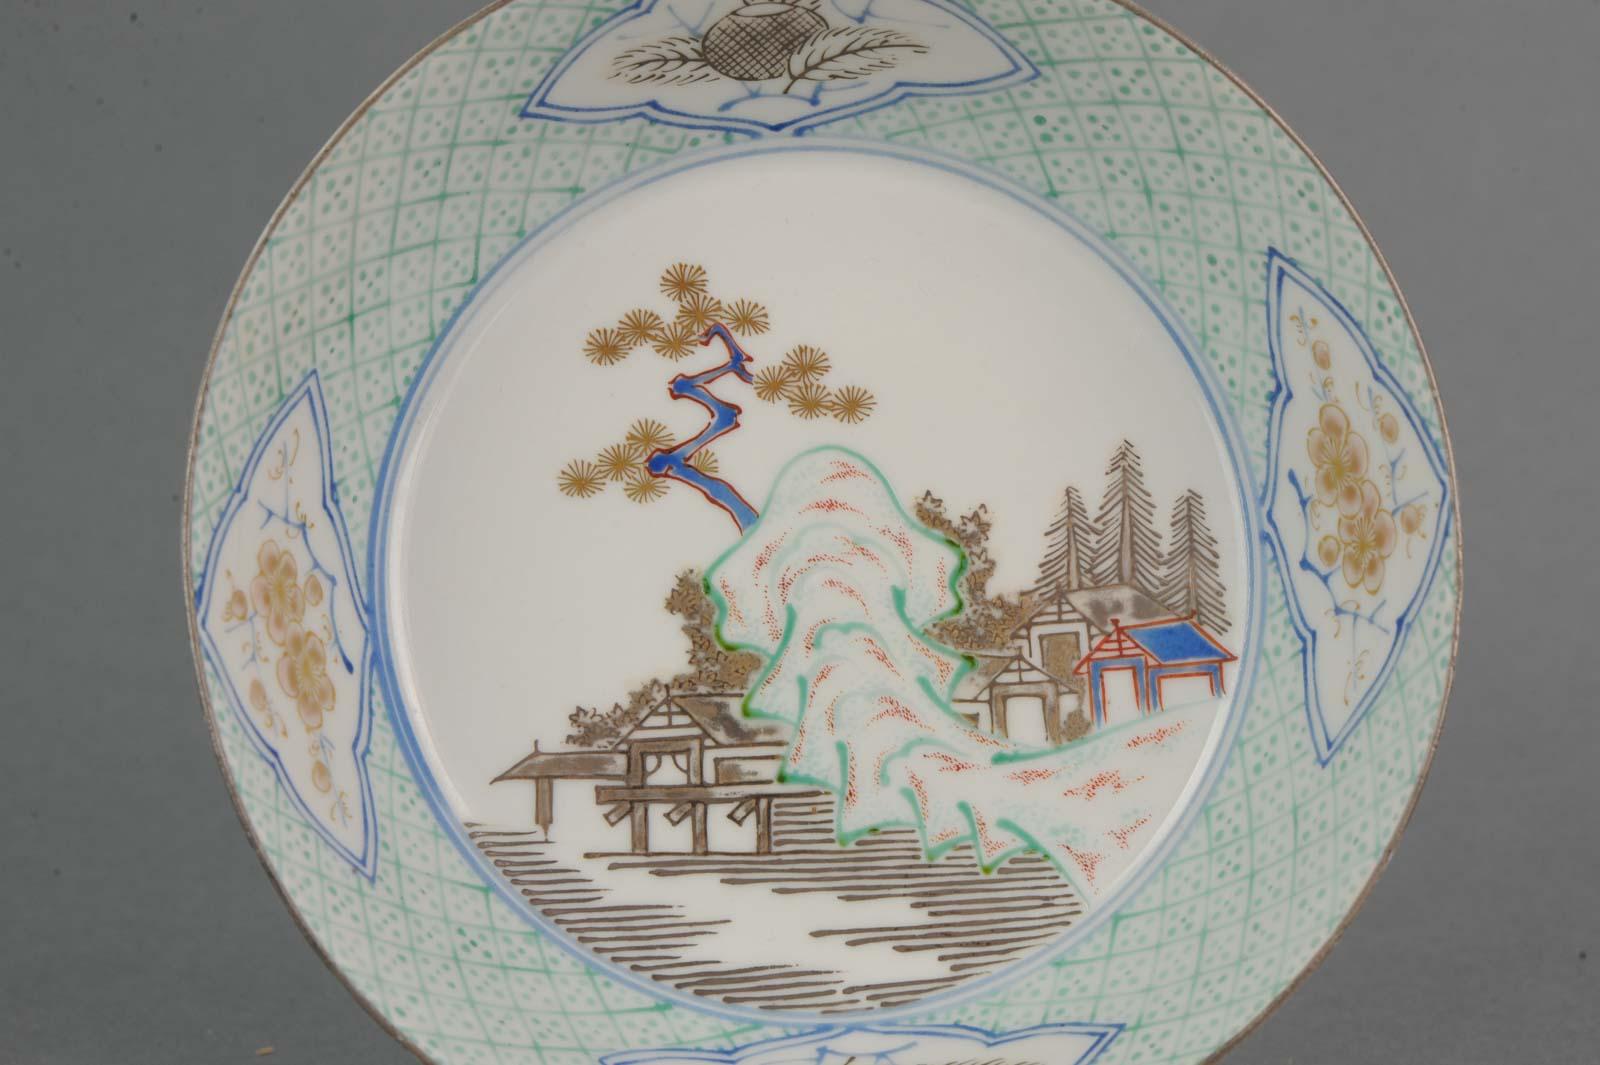 18th Century and Earlier Antique 17th Century Japanese Porcelain Bowl 1660-1680 Ko-Imari Ninsei